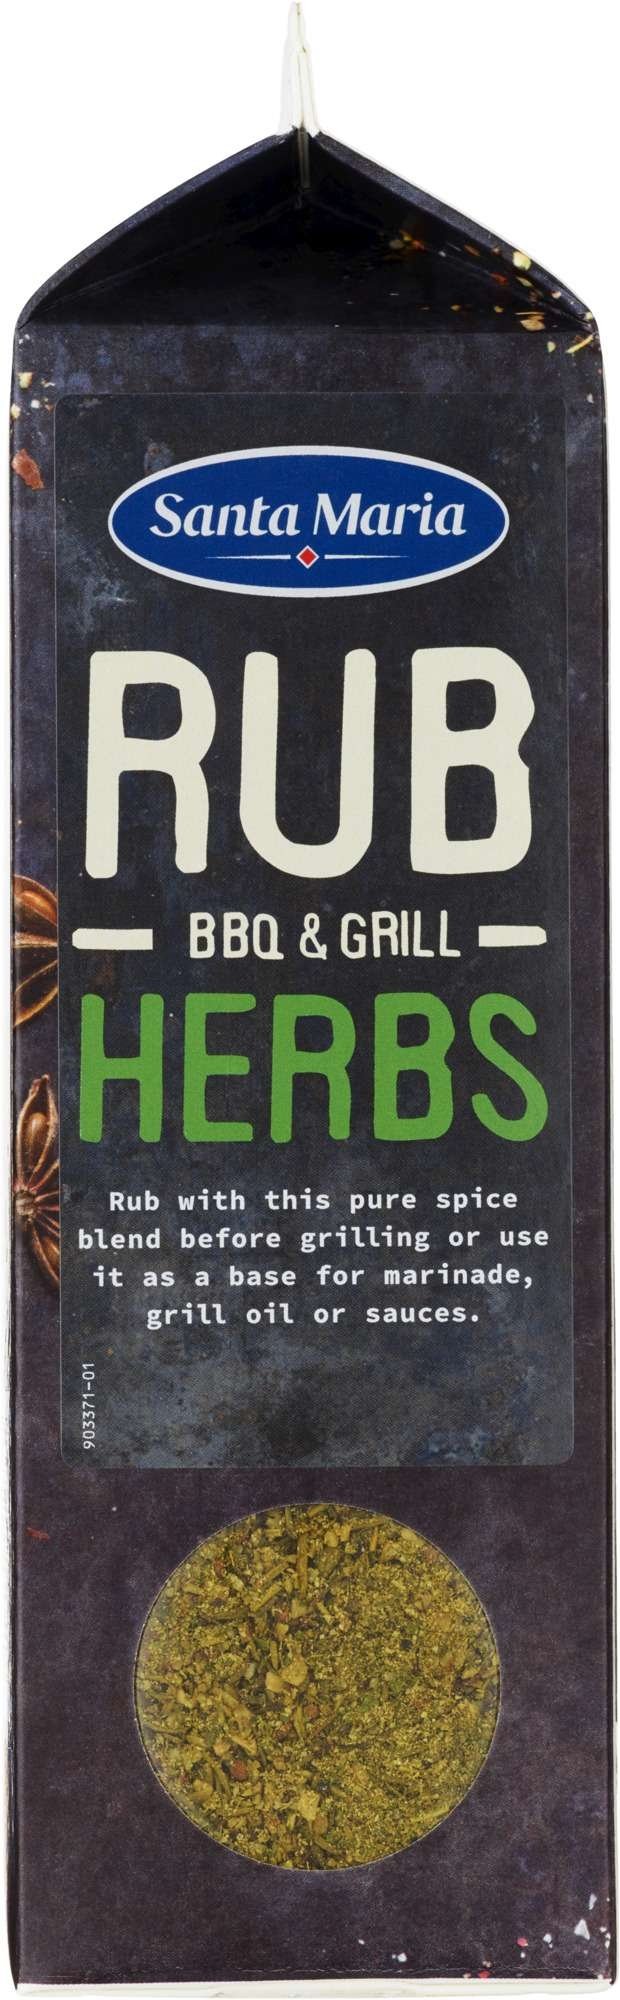 Bbq rub herbs 580g